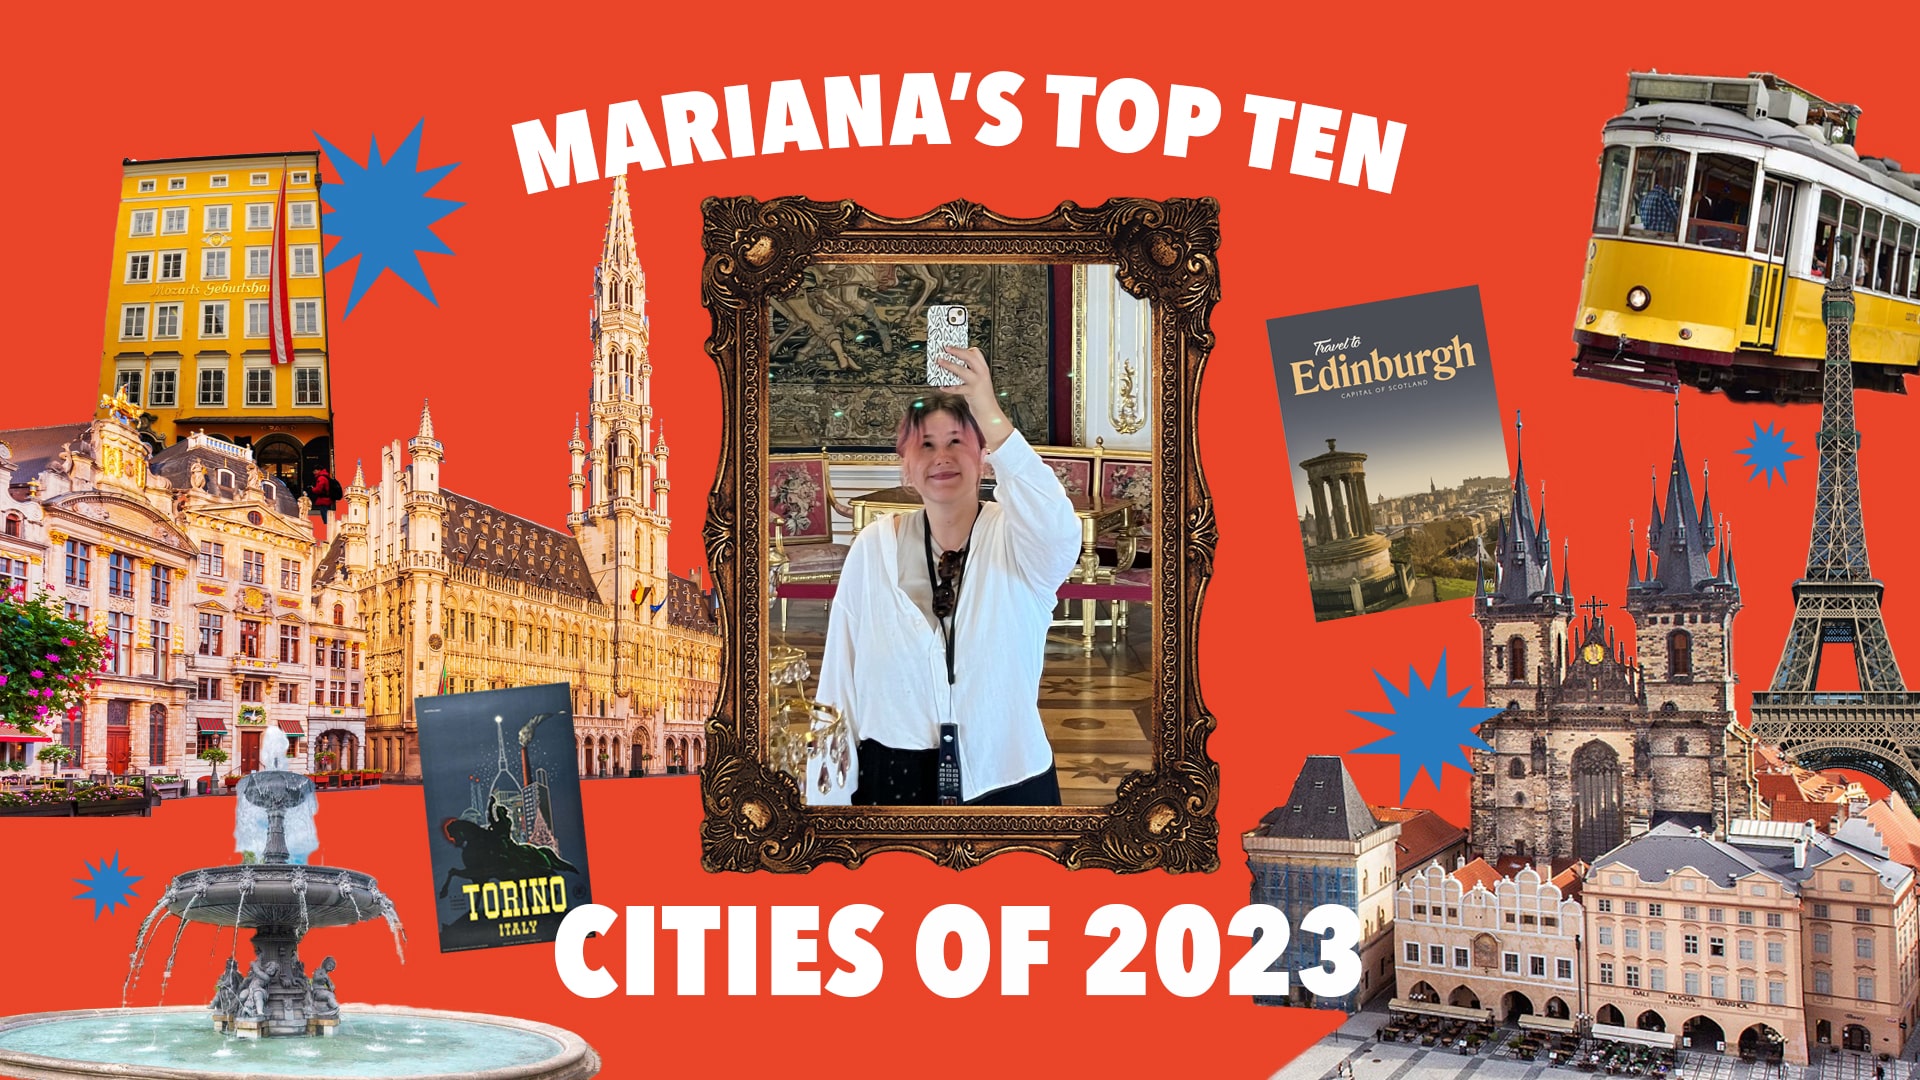 Holiday Top 10 - Mariana